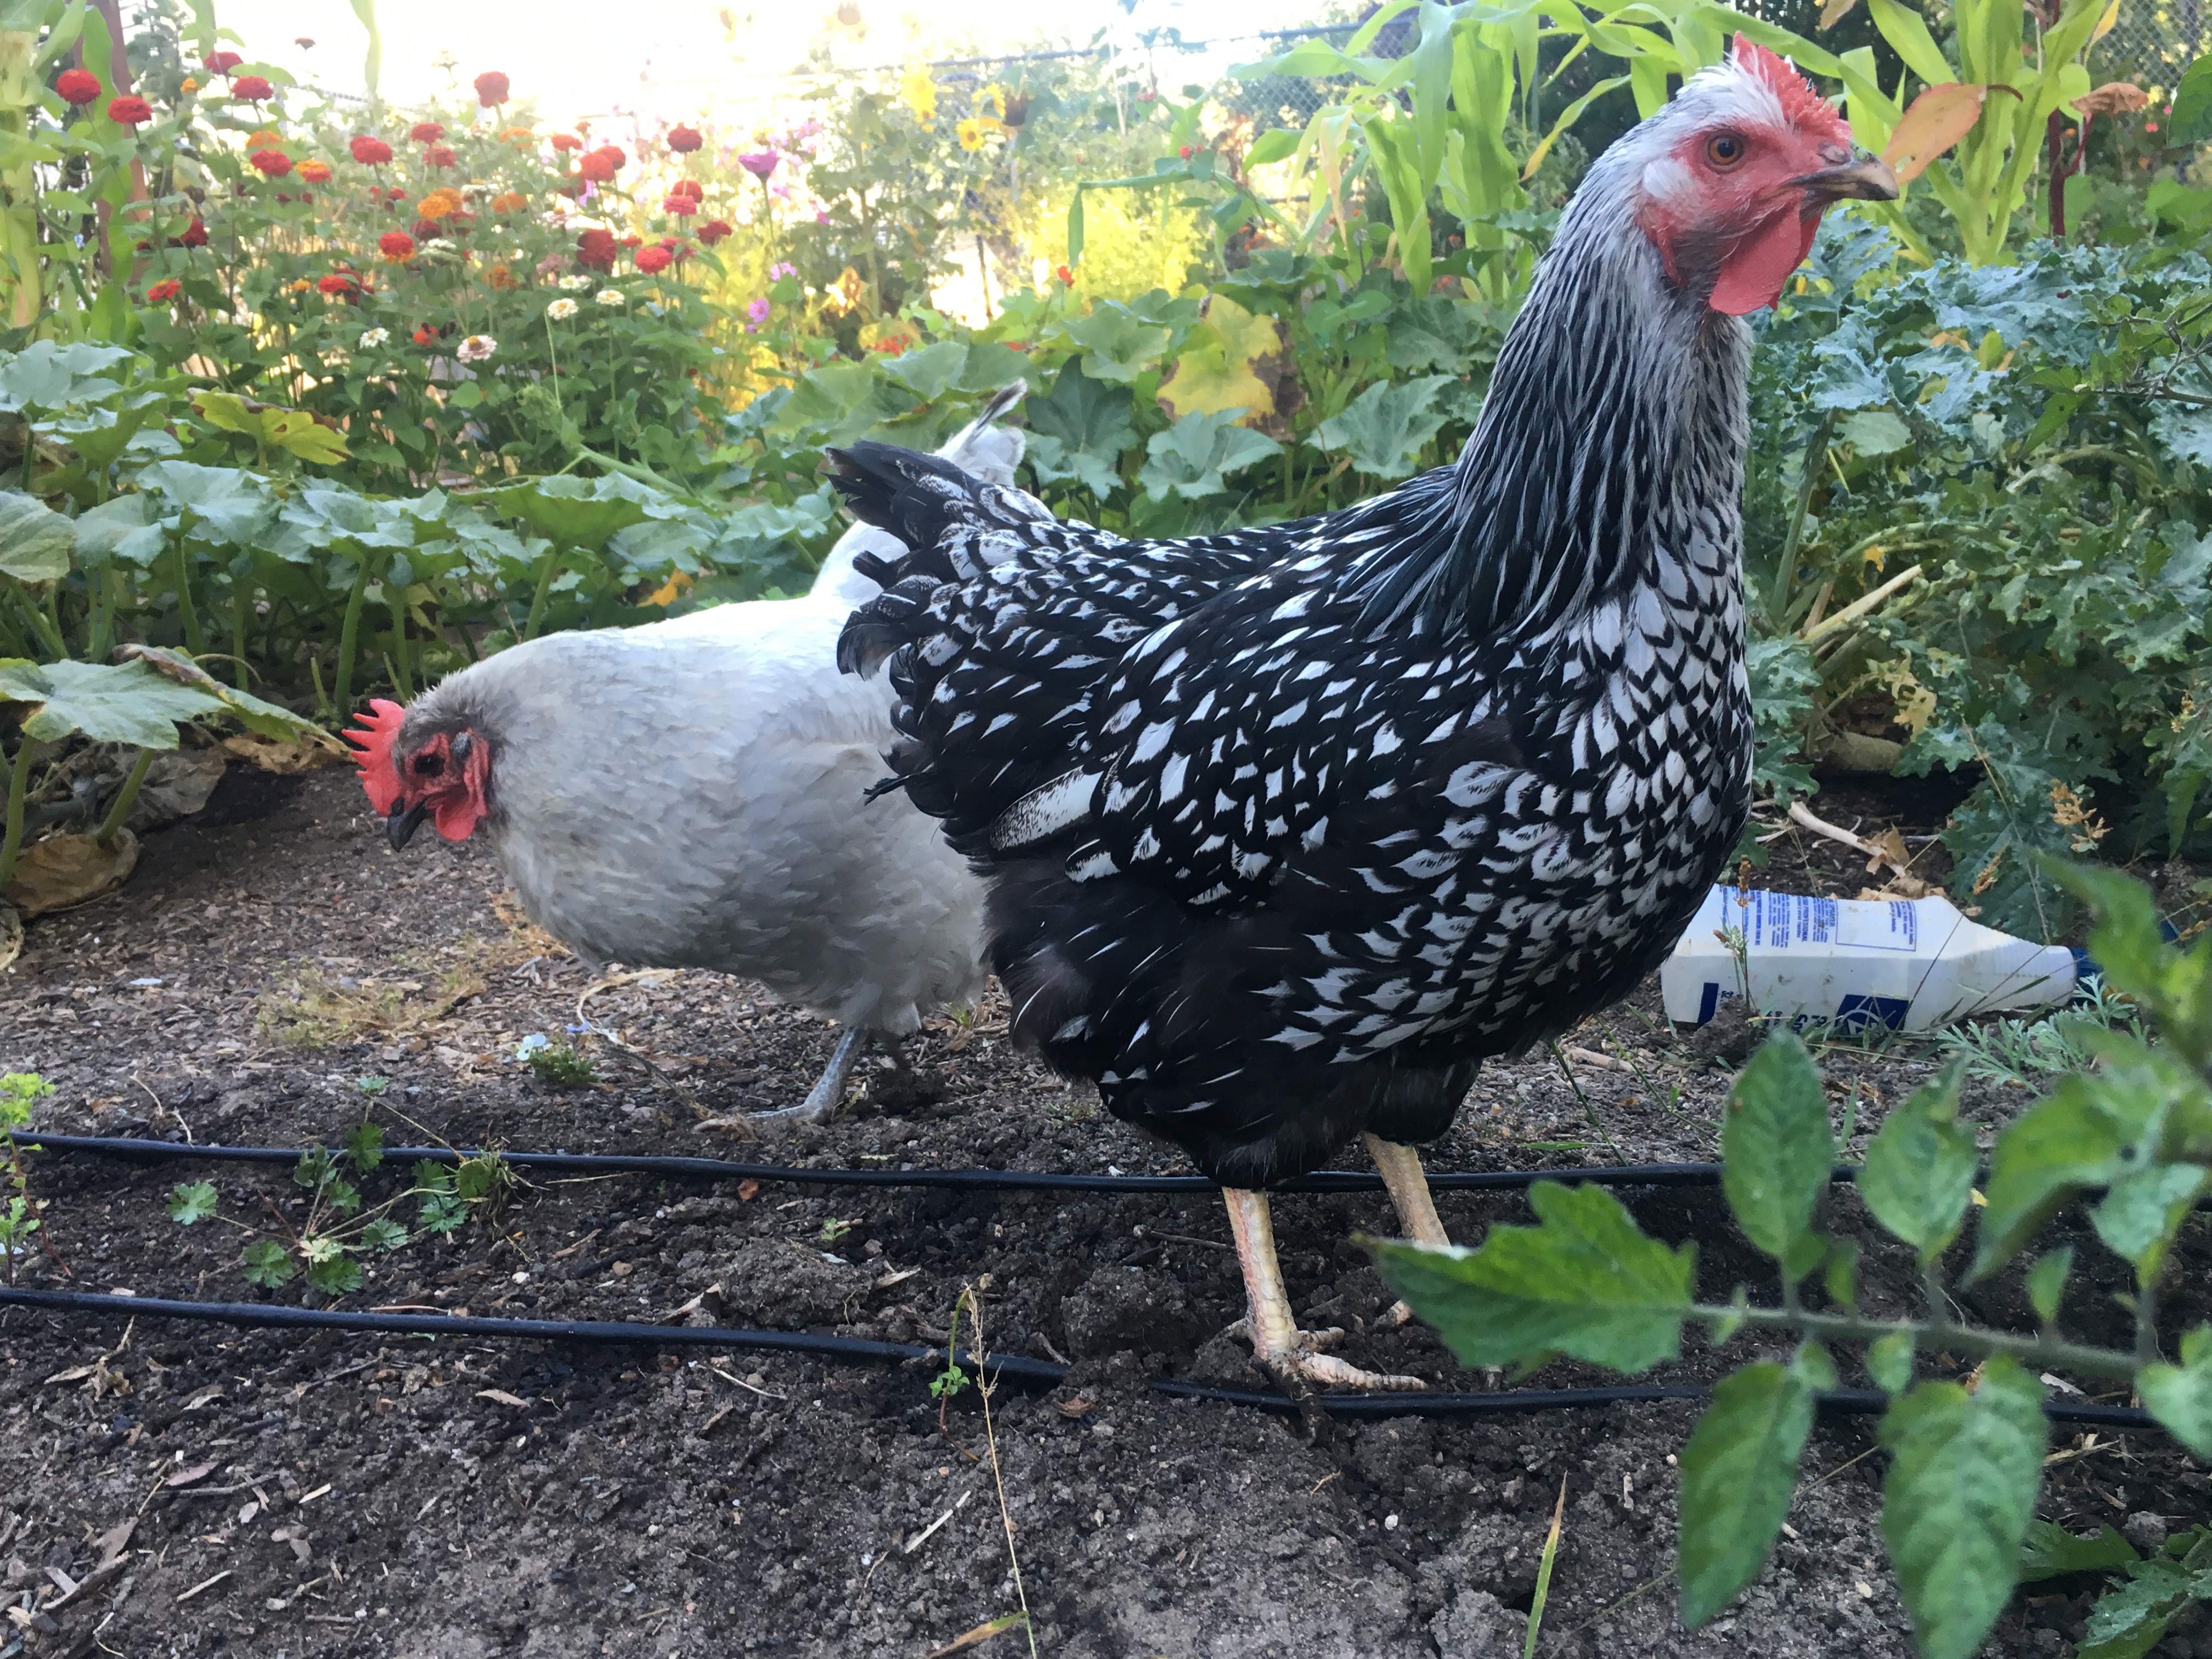 Blossom, our Silver Laced Wyandotte chicken, enjoying the garden